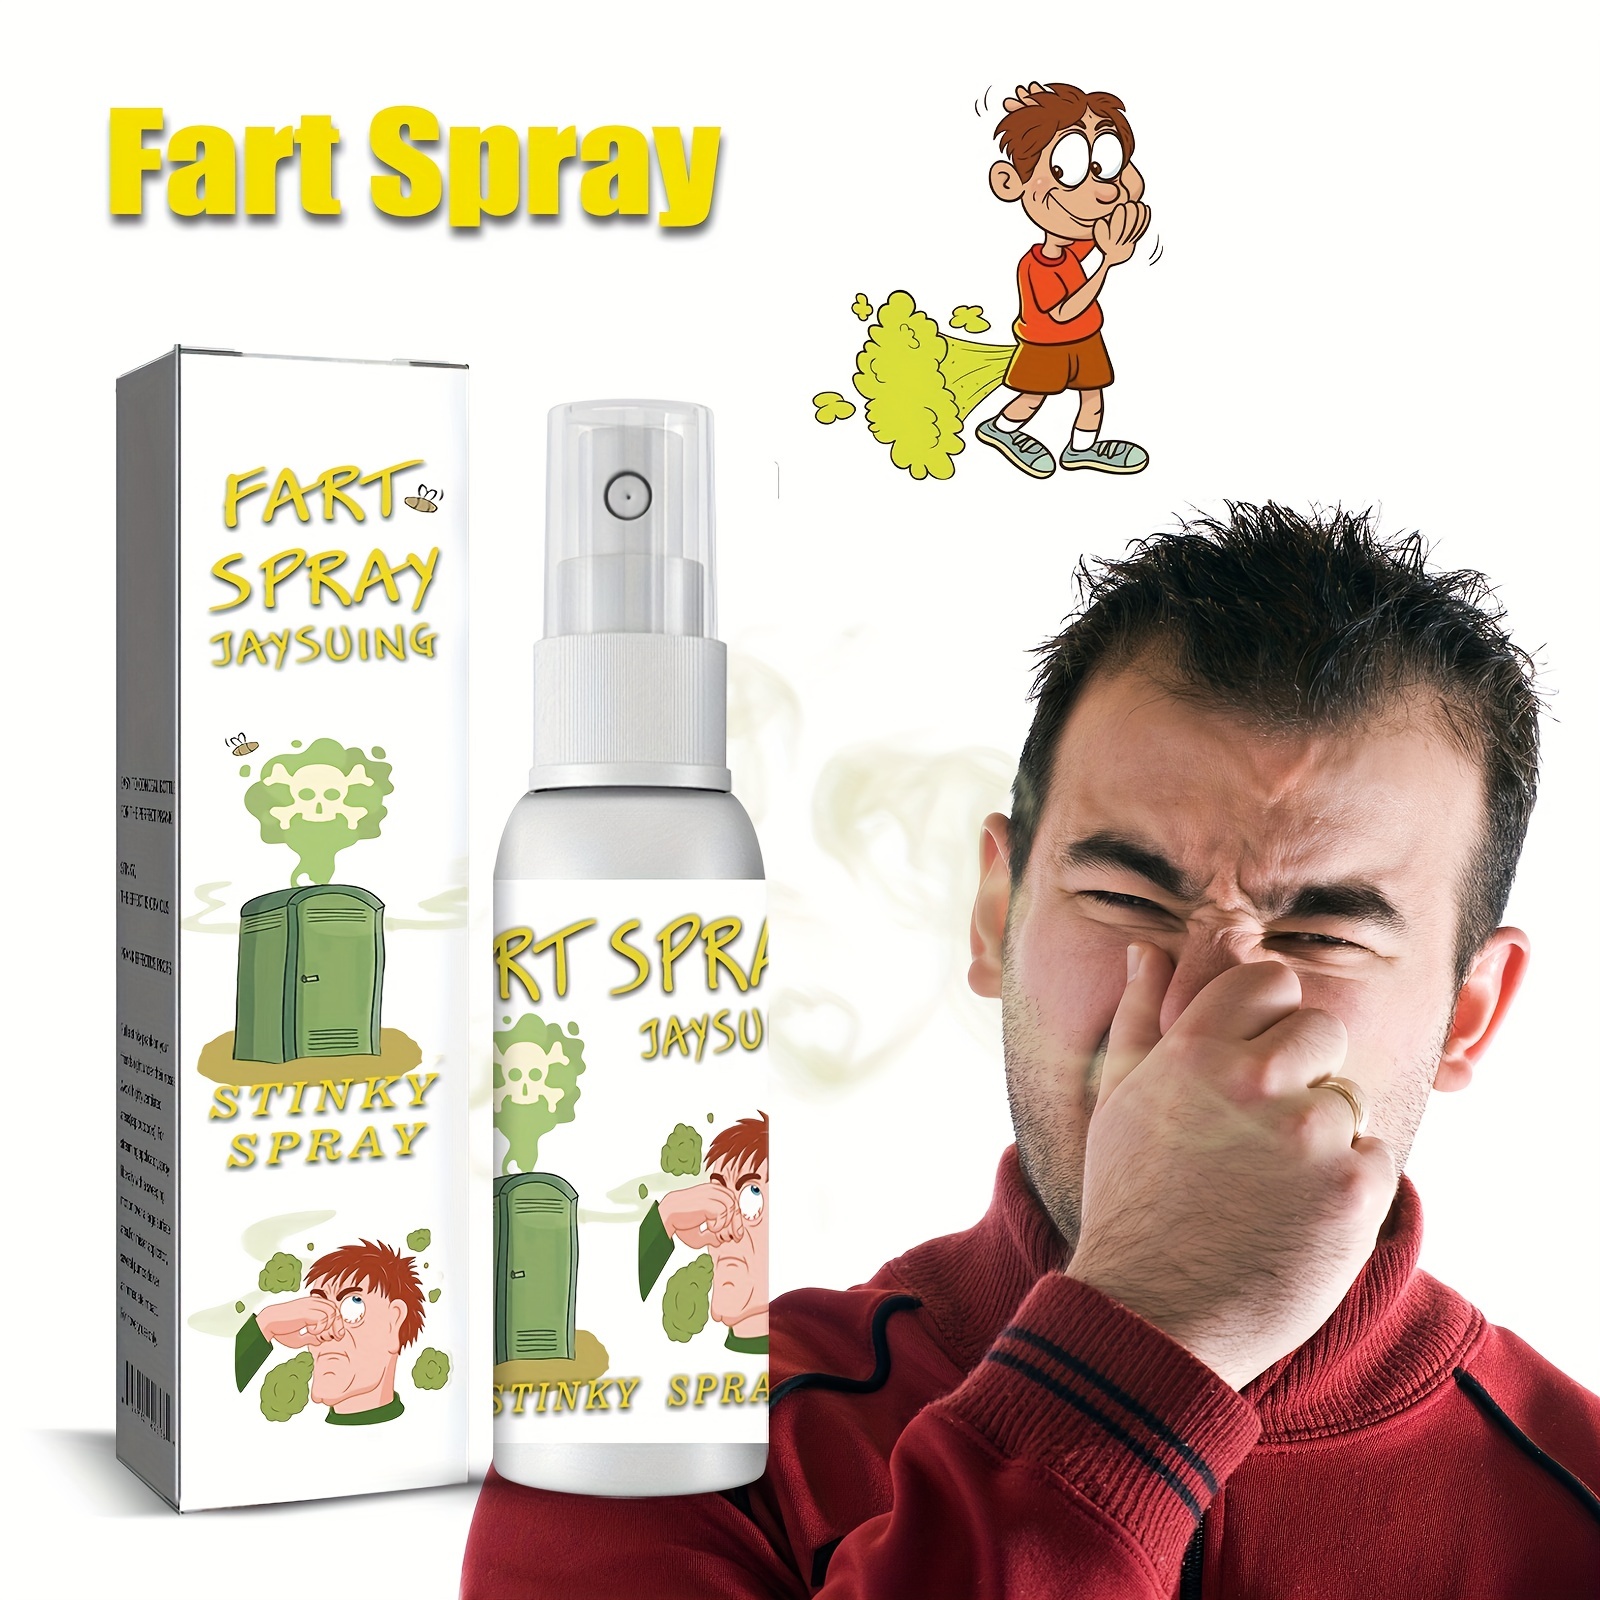 Liquid Fart Spray Stink Bomb Smelly Stinky Ass Toxic Bomb Crap Gag